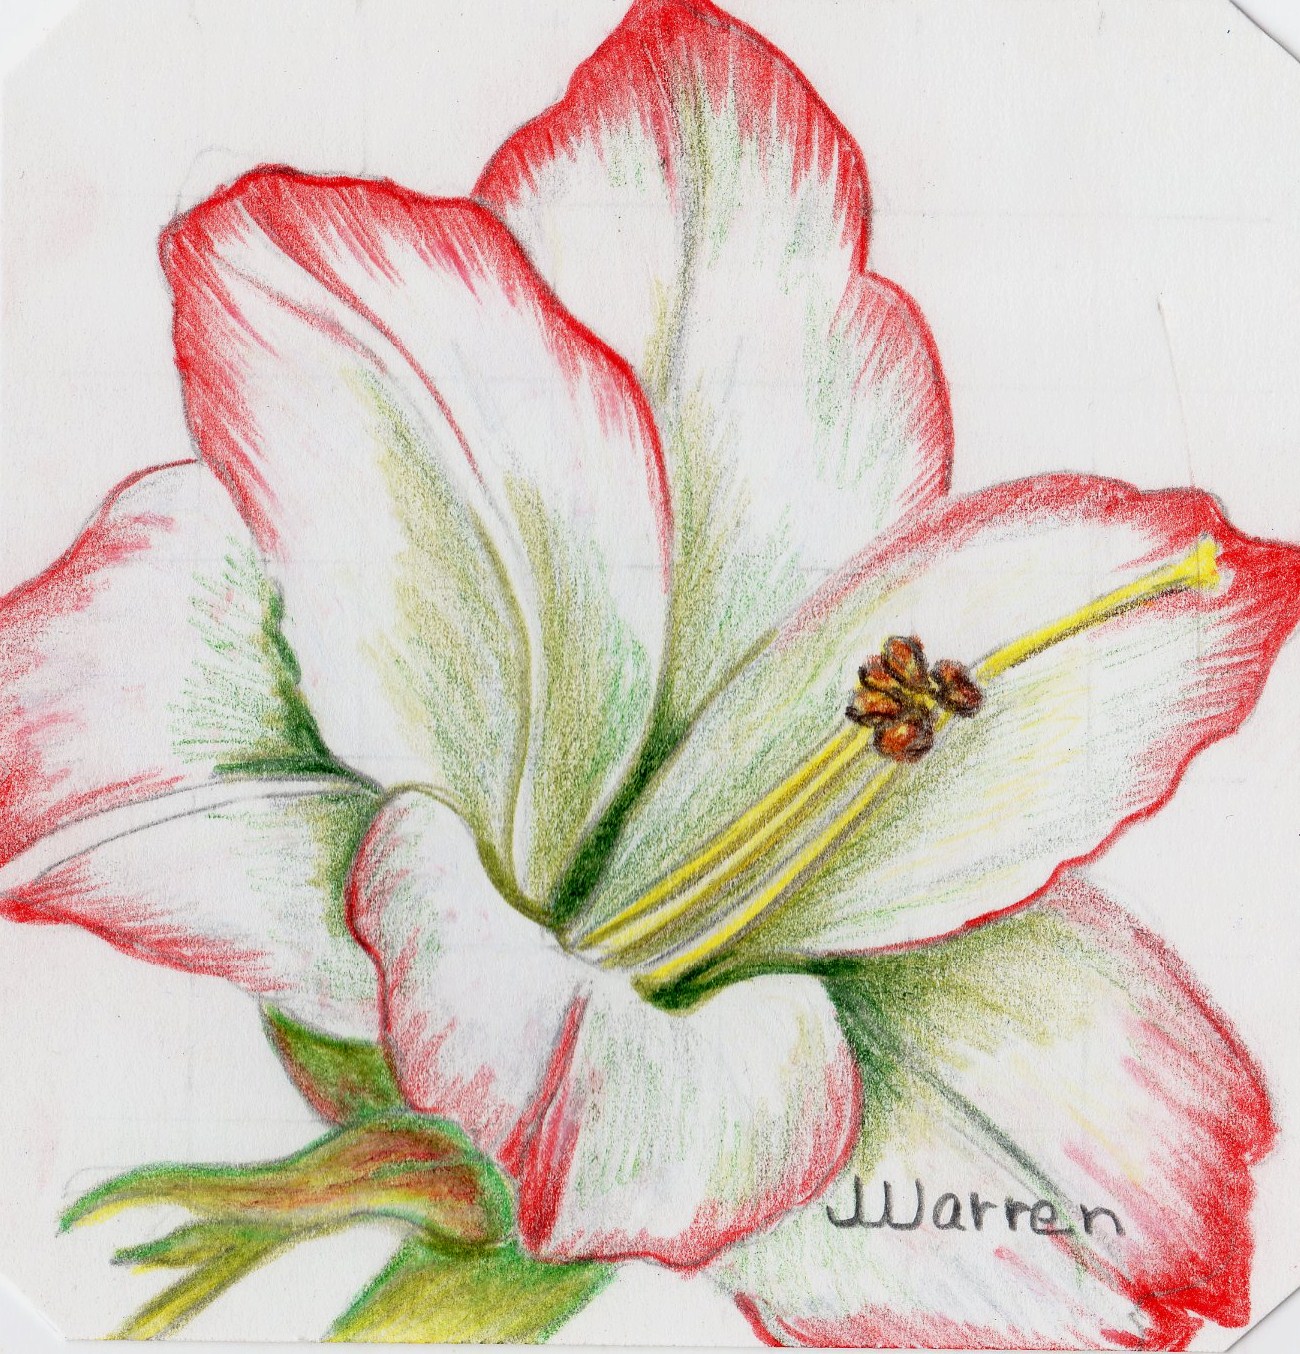 Amaryllis Flower Drawing at GetDrawings Free download